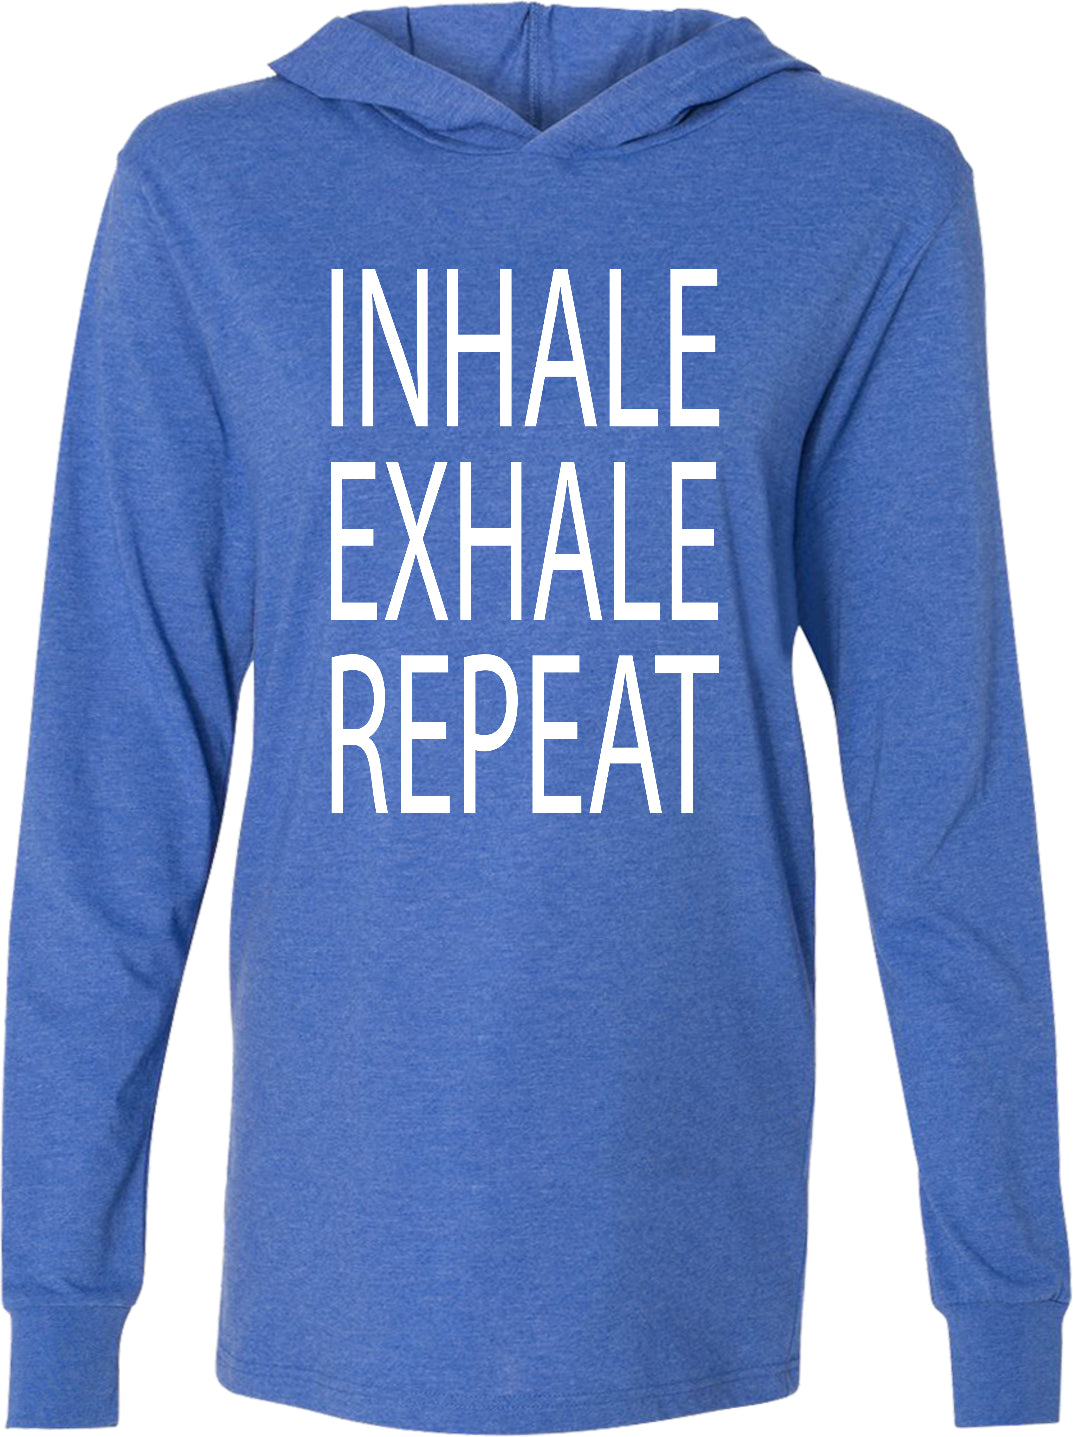 Inhale Exhale Repeat Lightweight Yoga Hoodie Tee Shirt